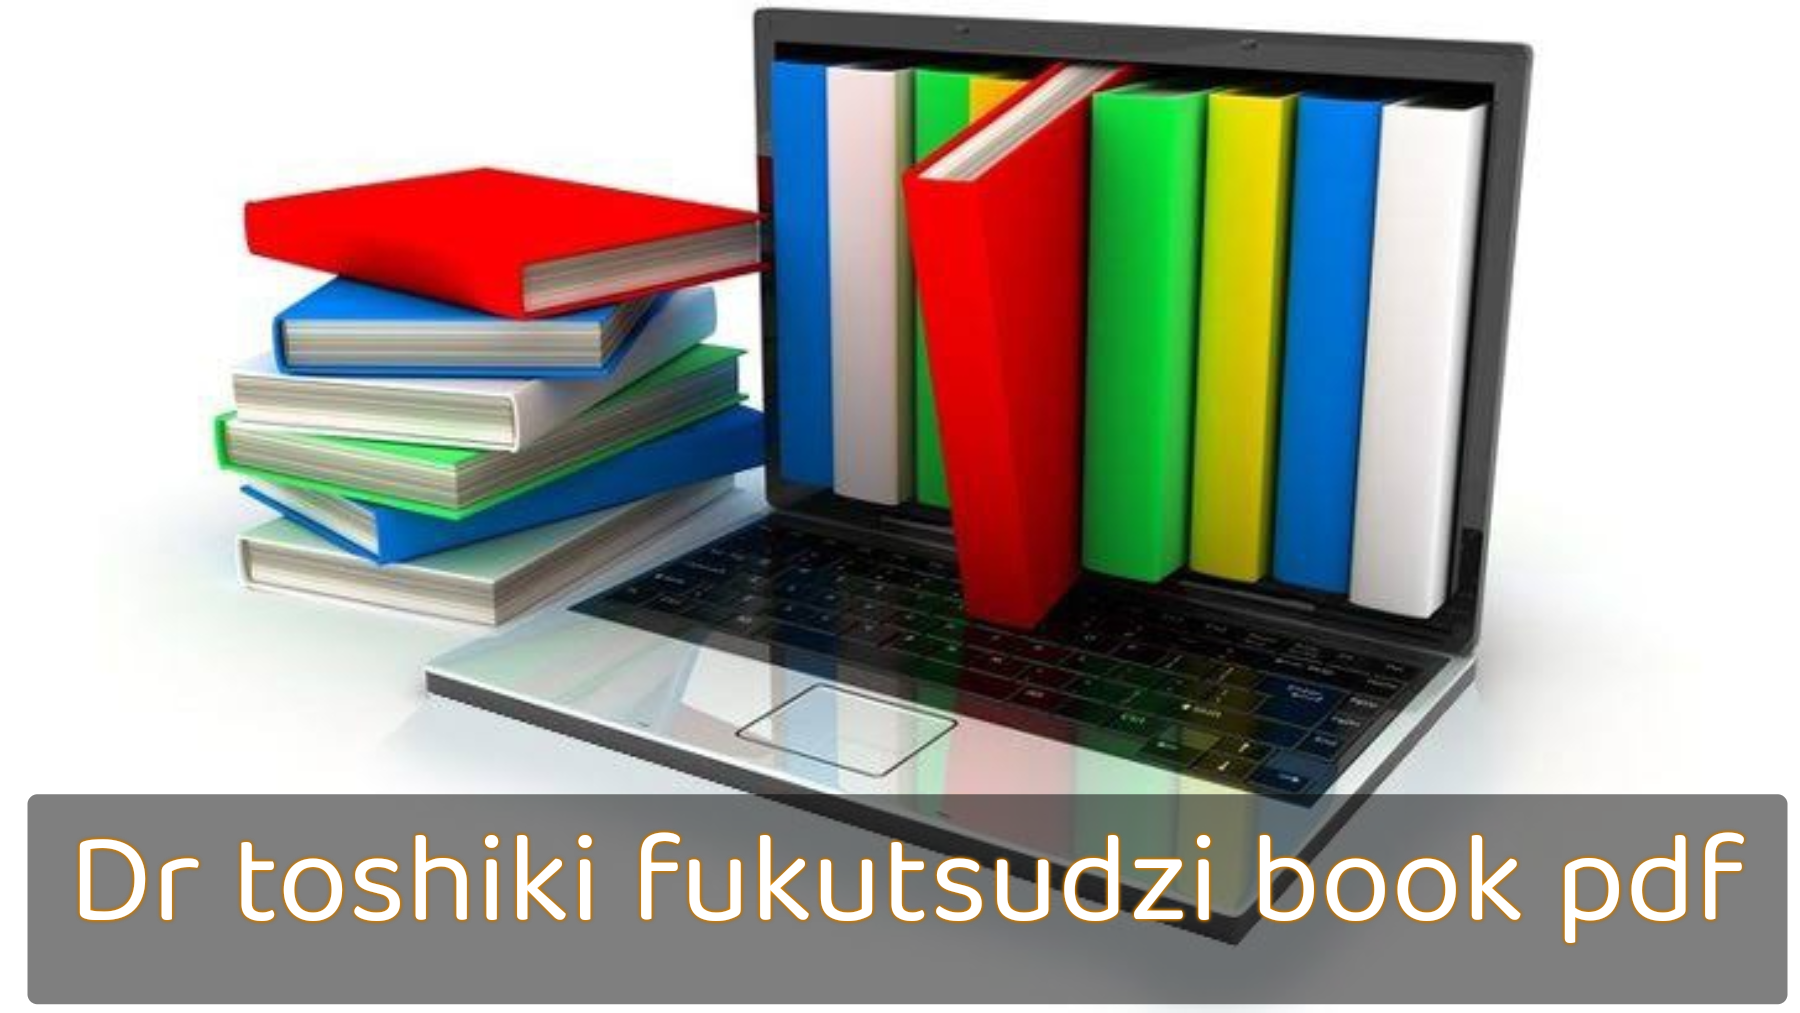 Dr toshiki fukutsudzi book pdf, Dr toshiki fukutsudzi book pdf, Dr toshiki fukutsudzi, Toshiki fukutsudzi before and after